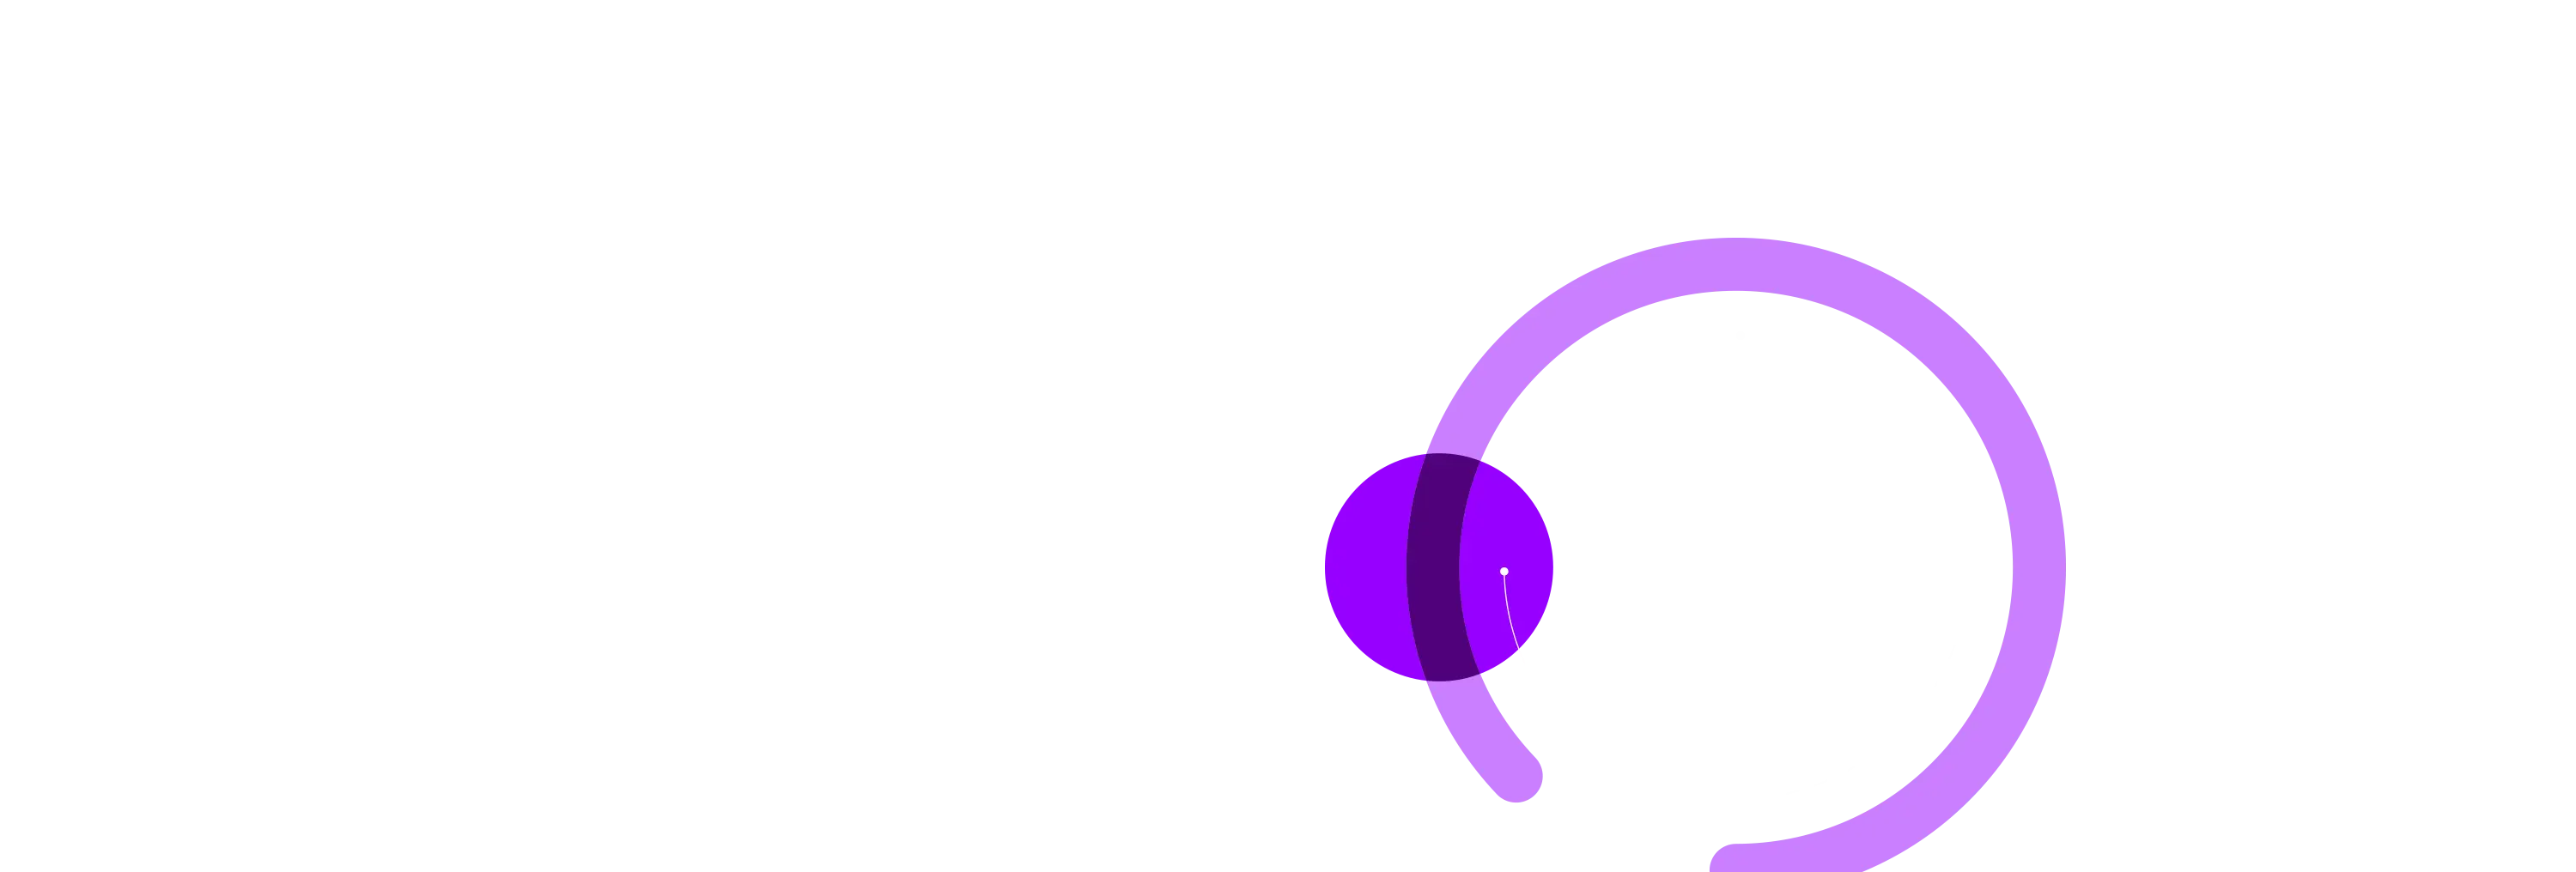 headset illustration in purple